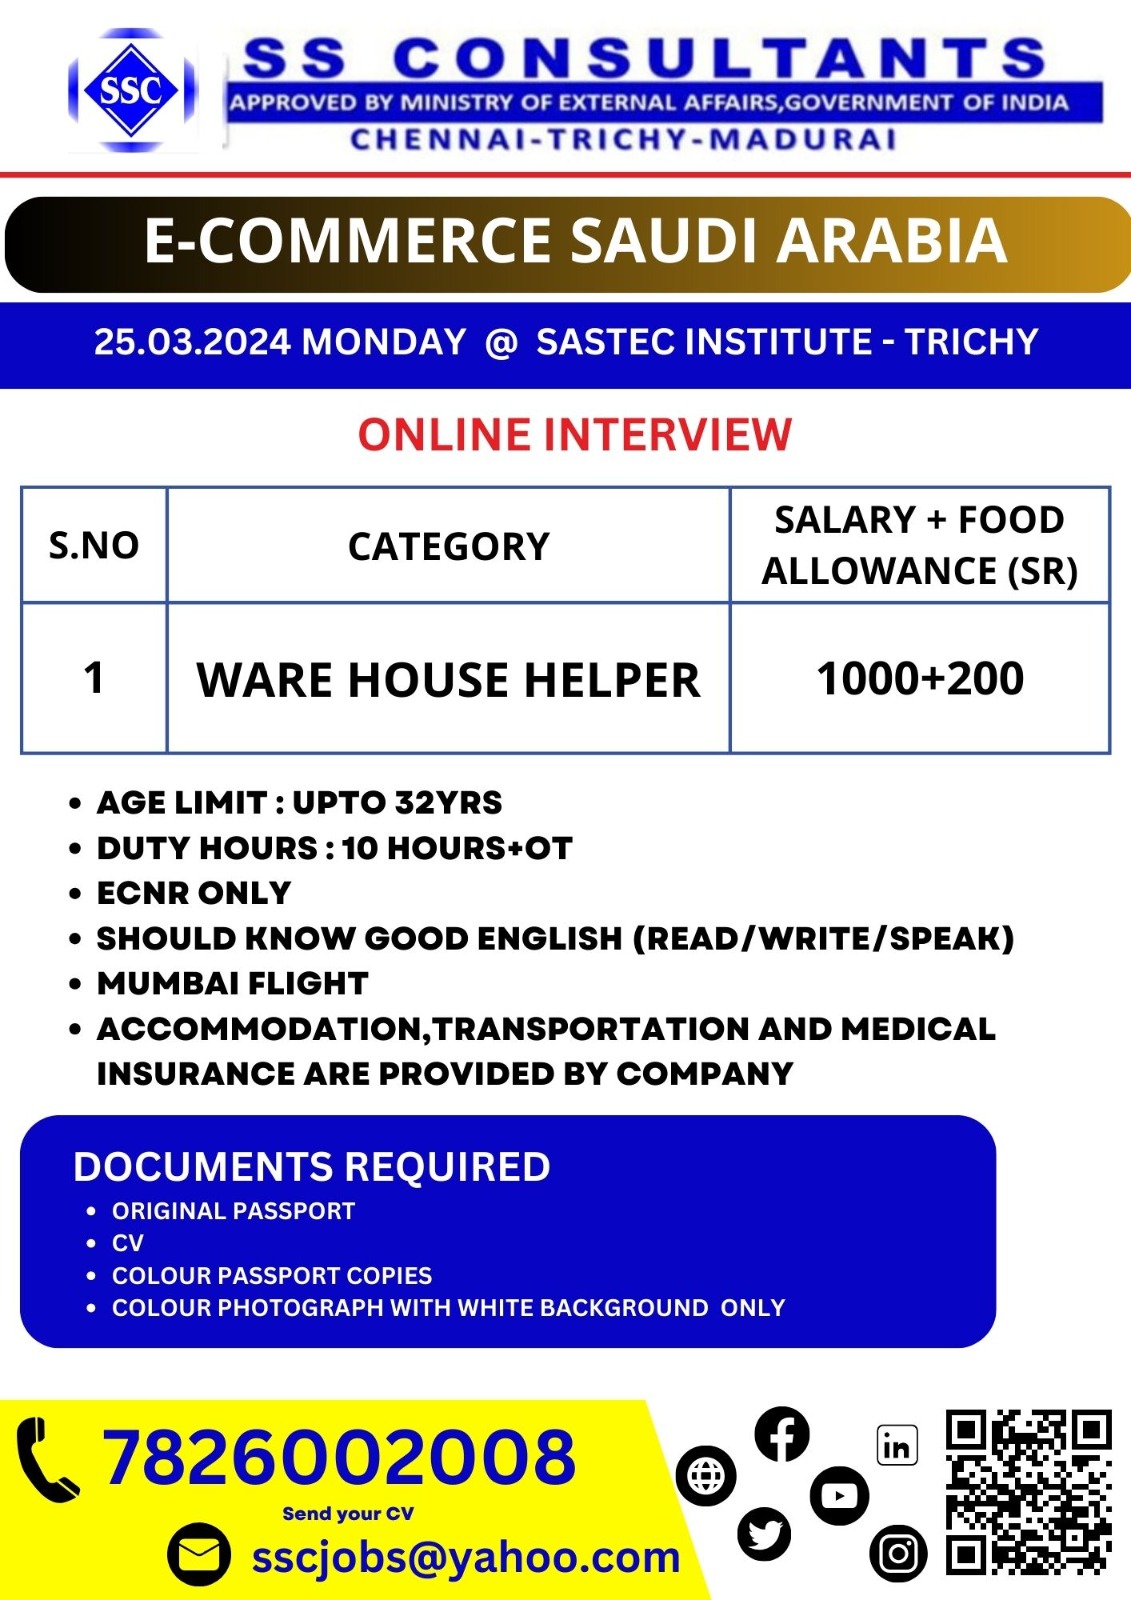 E-COMMERCE SAUDI ARABIA | HELPER JOB